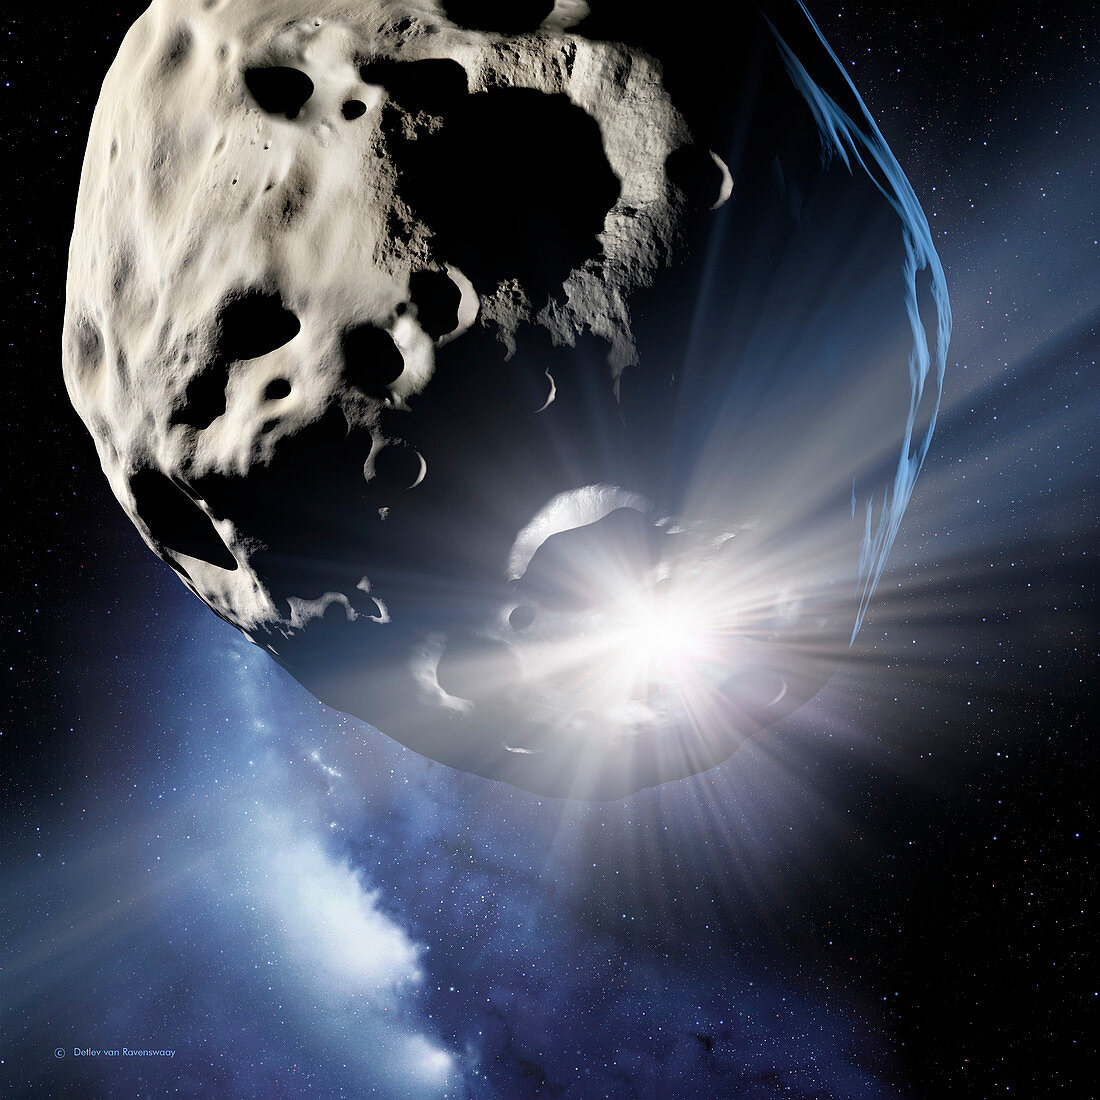 Asteroid deflection,impact flash